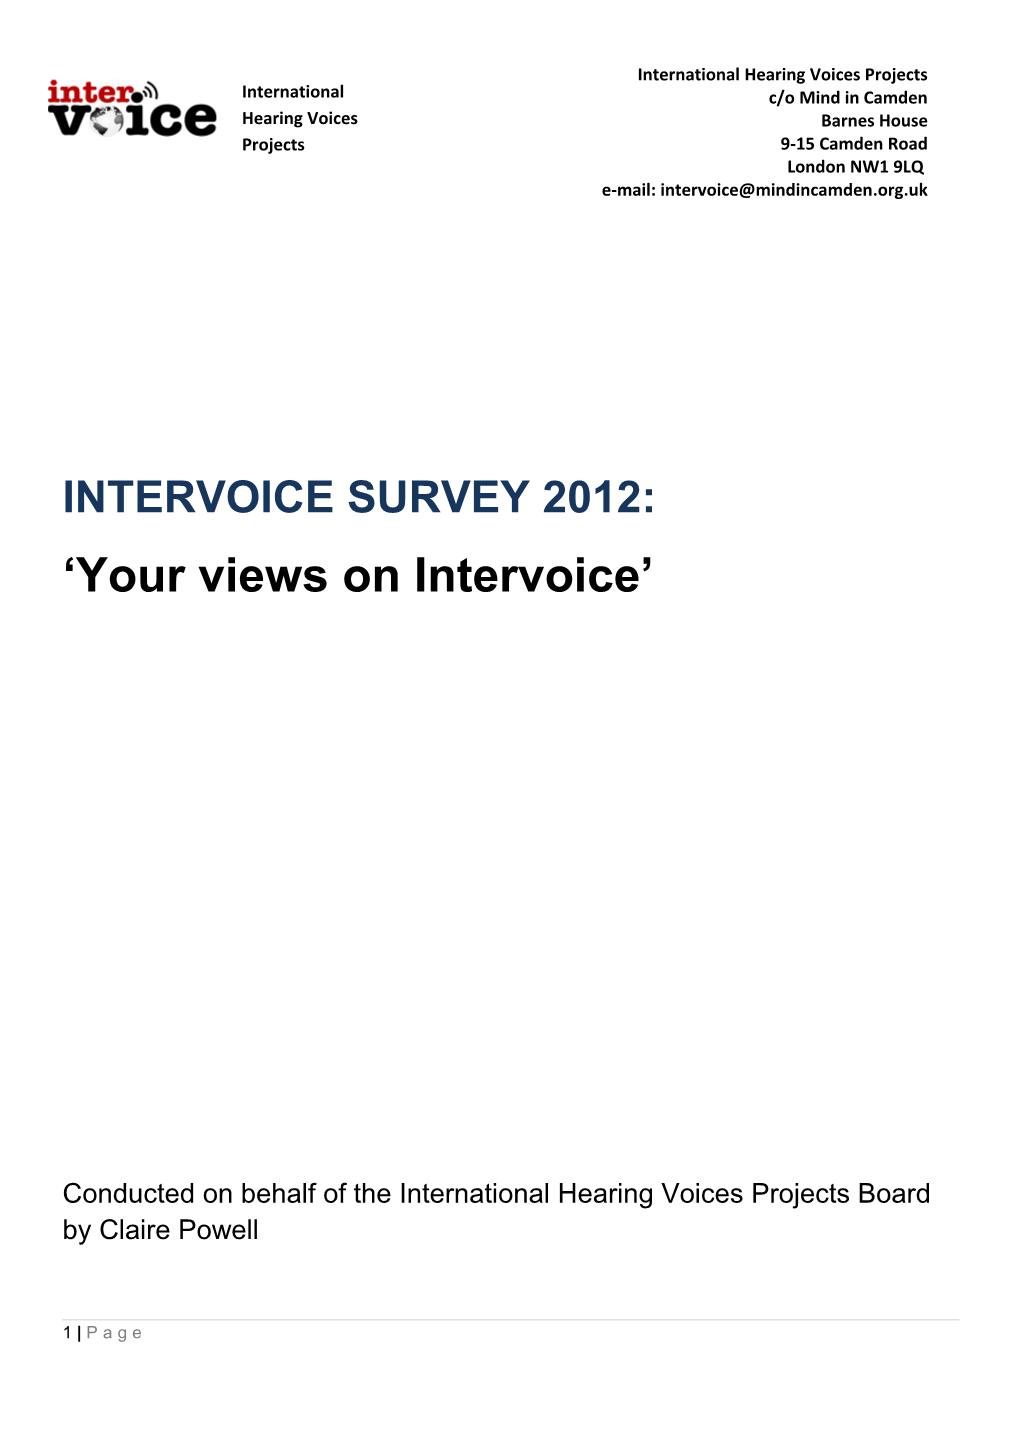 A Survey of Intervoice Members